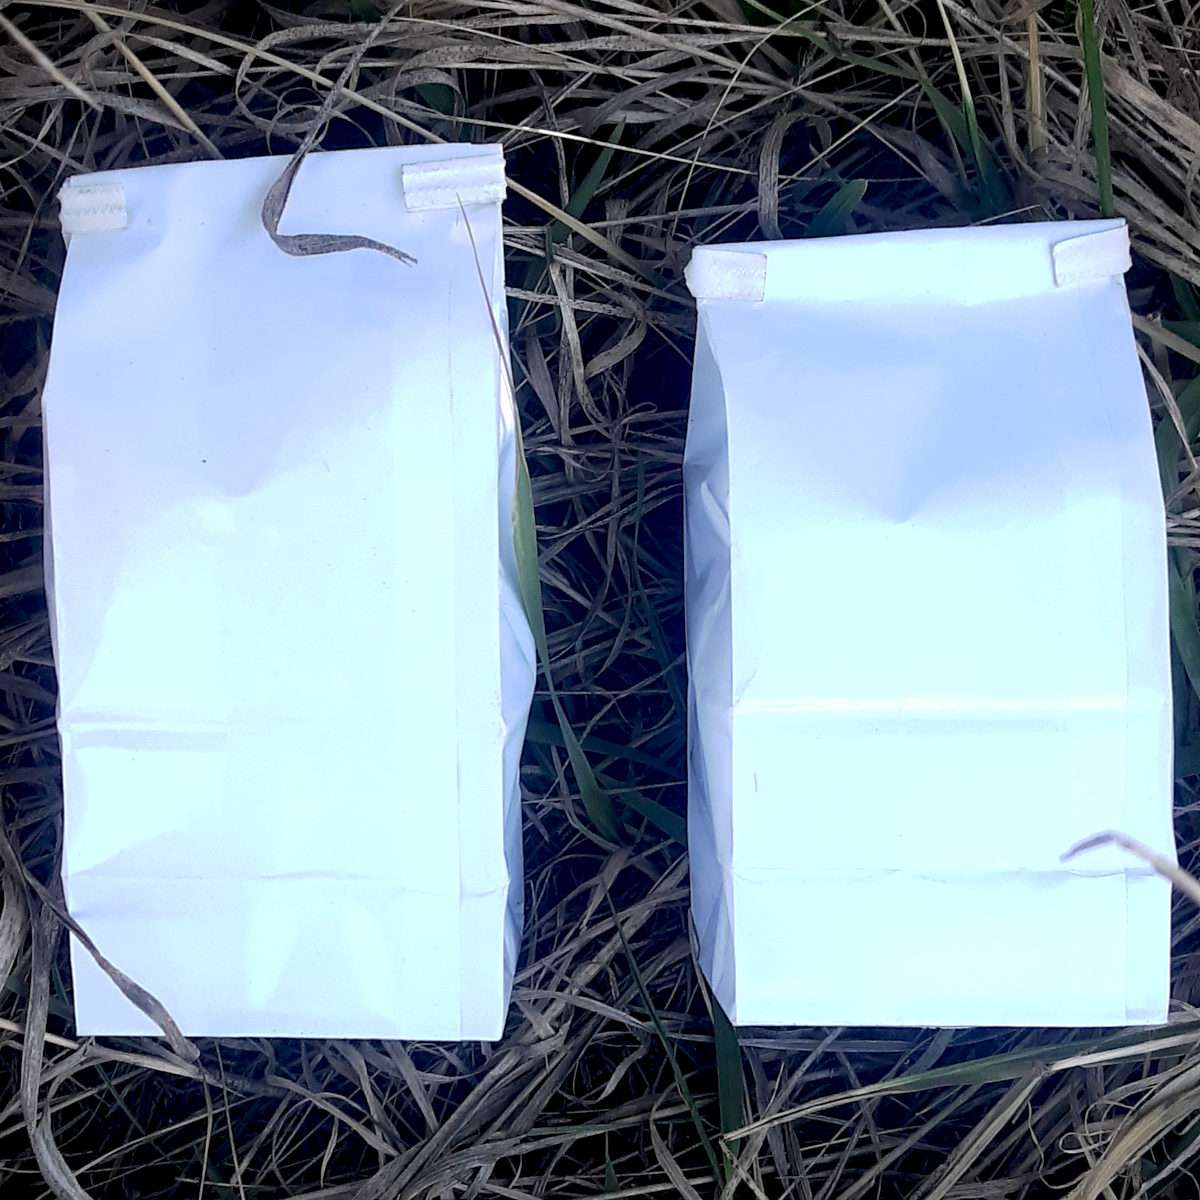 two bags of soil samples